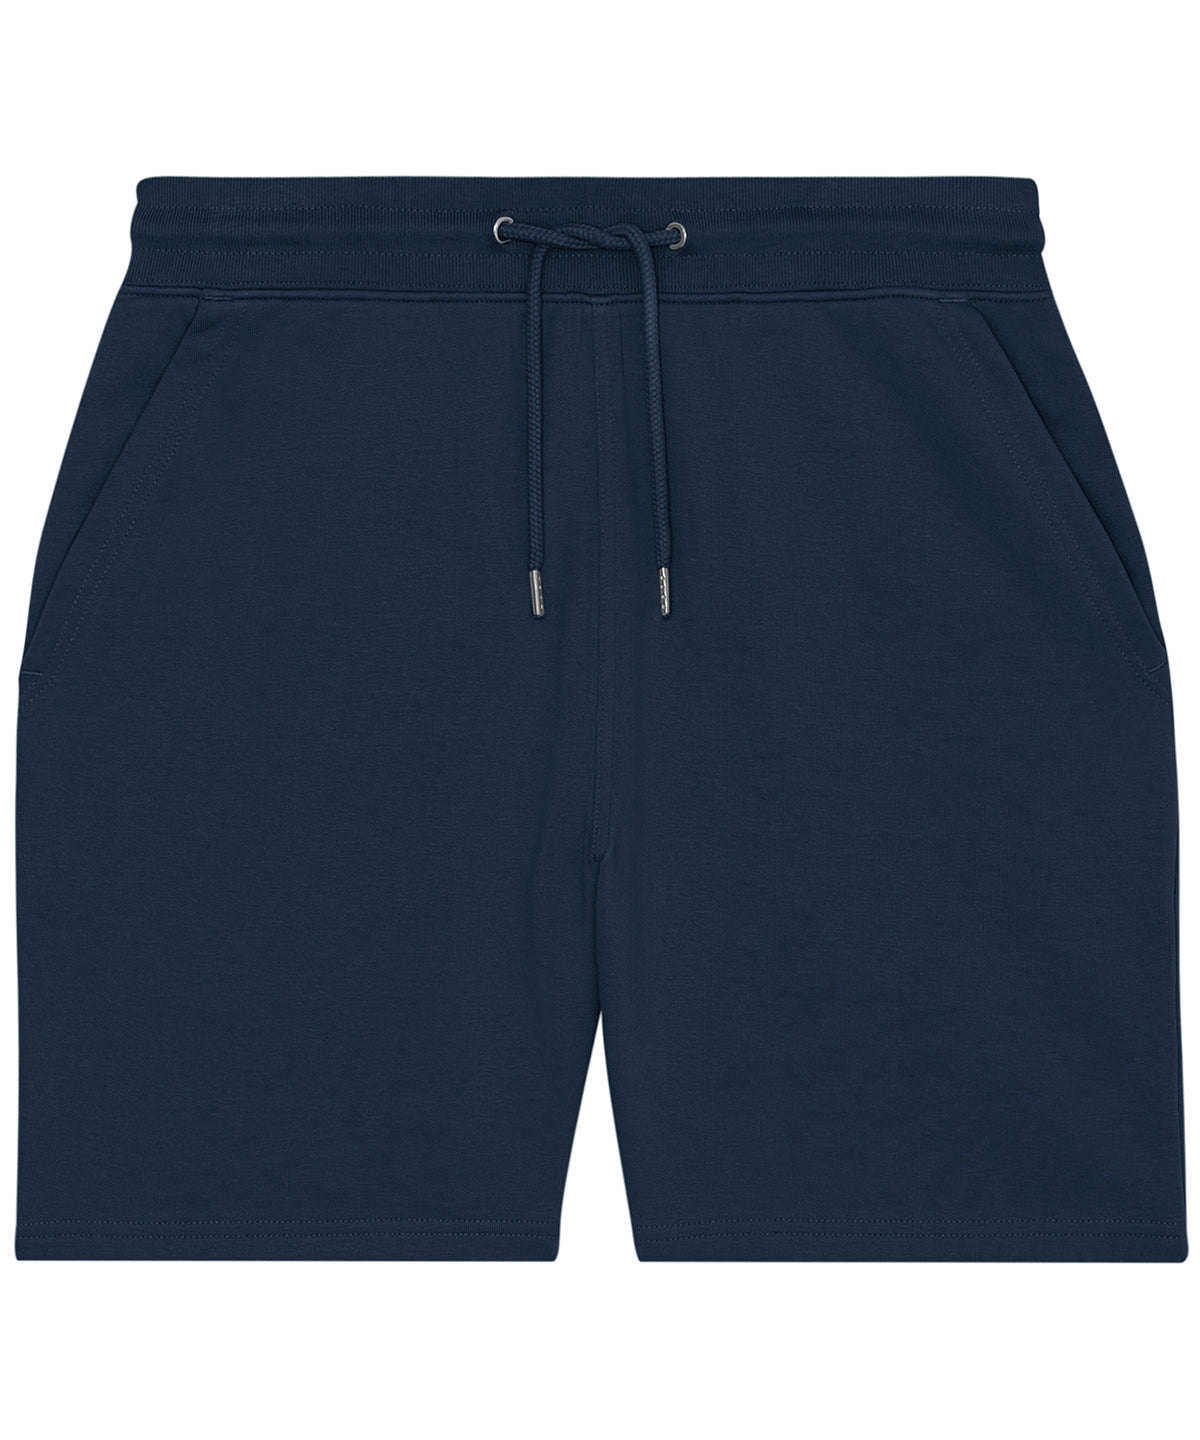 Essential Organic Jogger Shorts (Mens/Unisex)